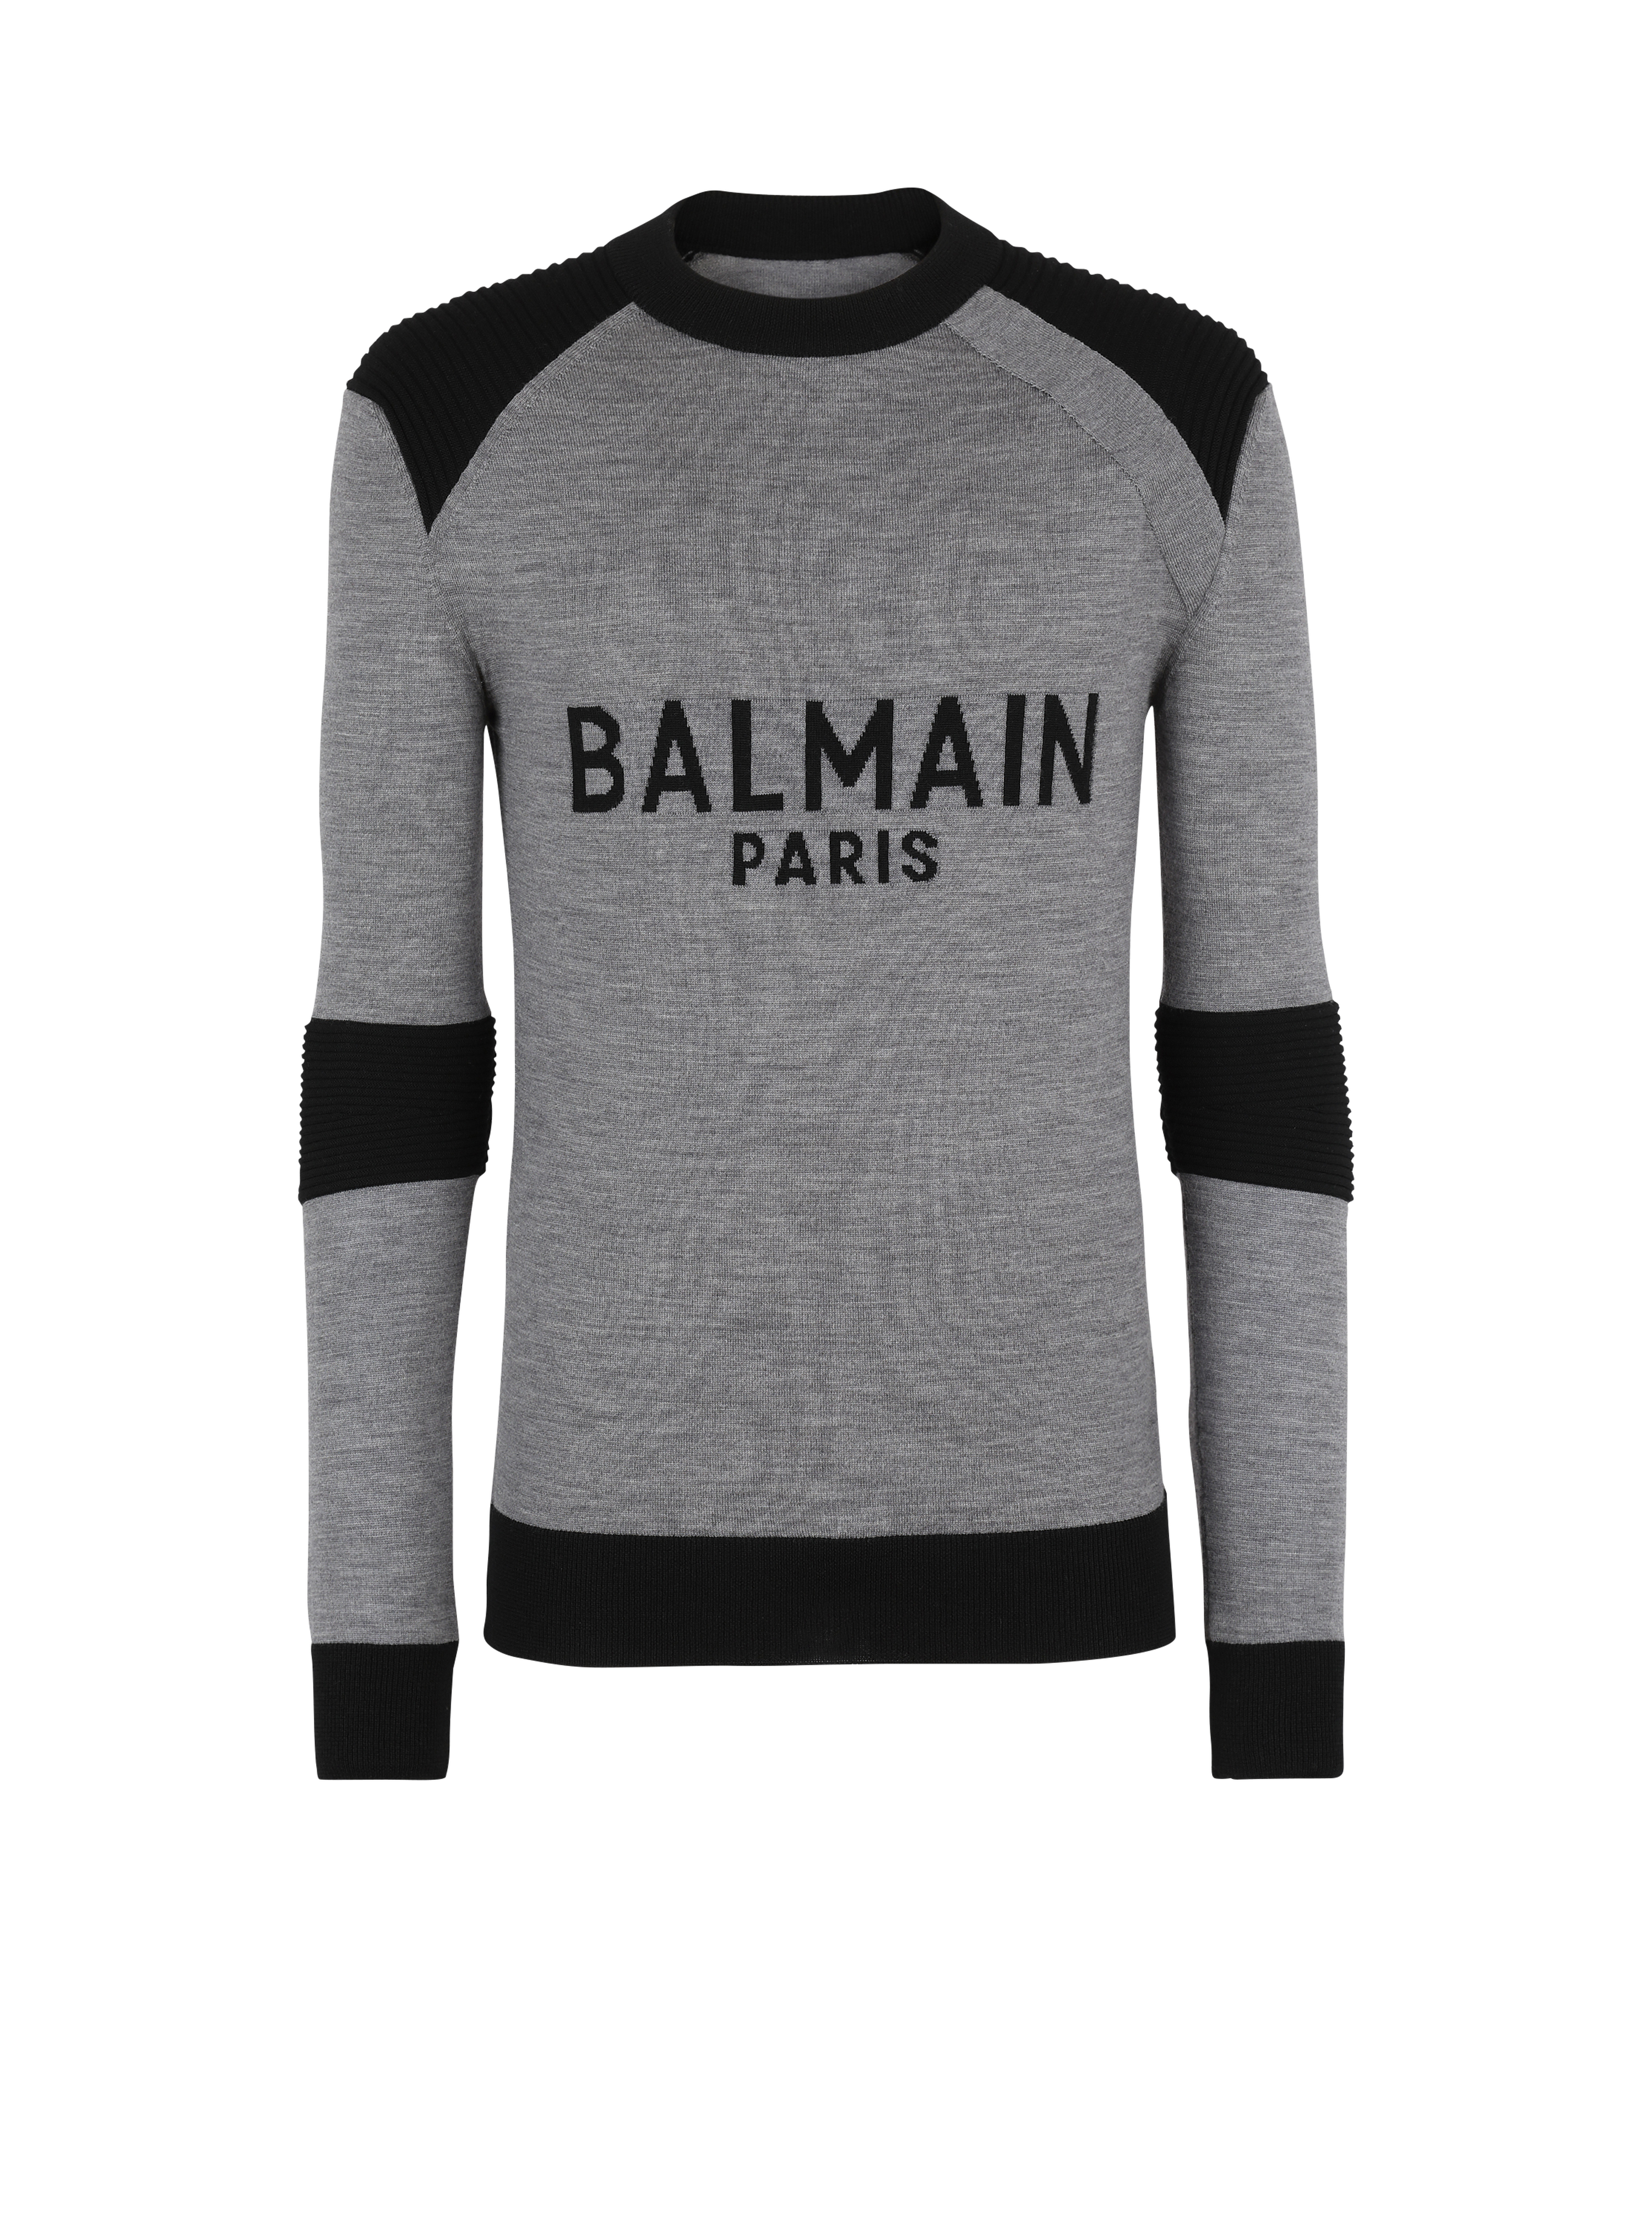 Wool jumper with Balmain Paris logo - Men | BALMAIN